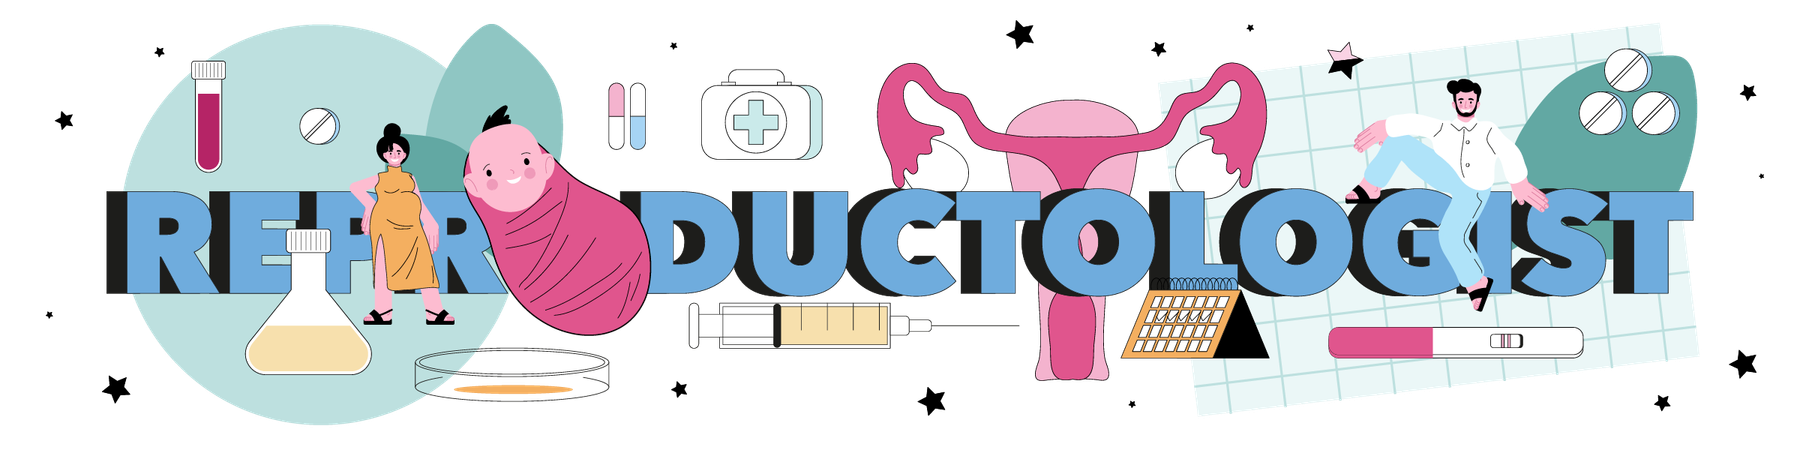 Reproductologist  Illustration